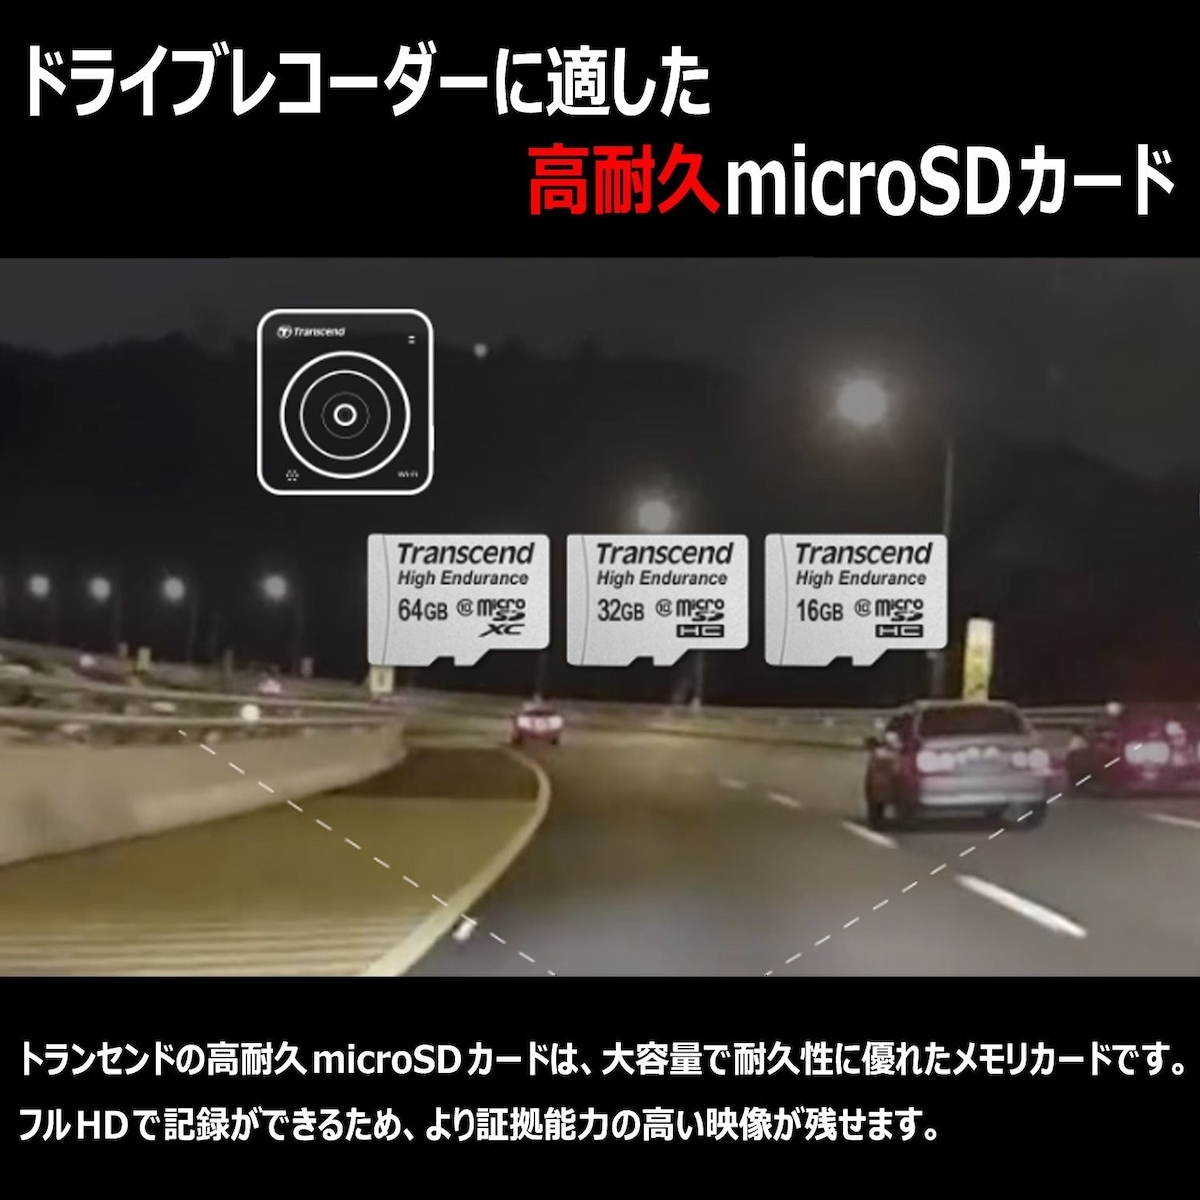  microSDHCカード 32GB 高耐久モデル画像2 